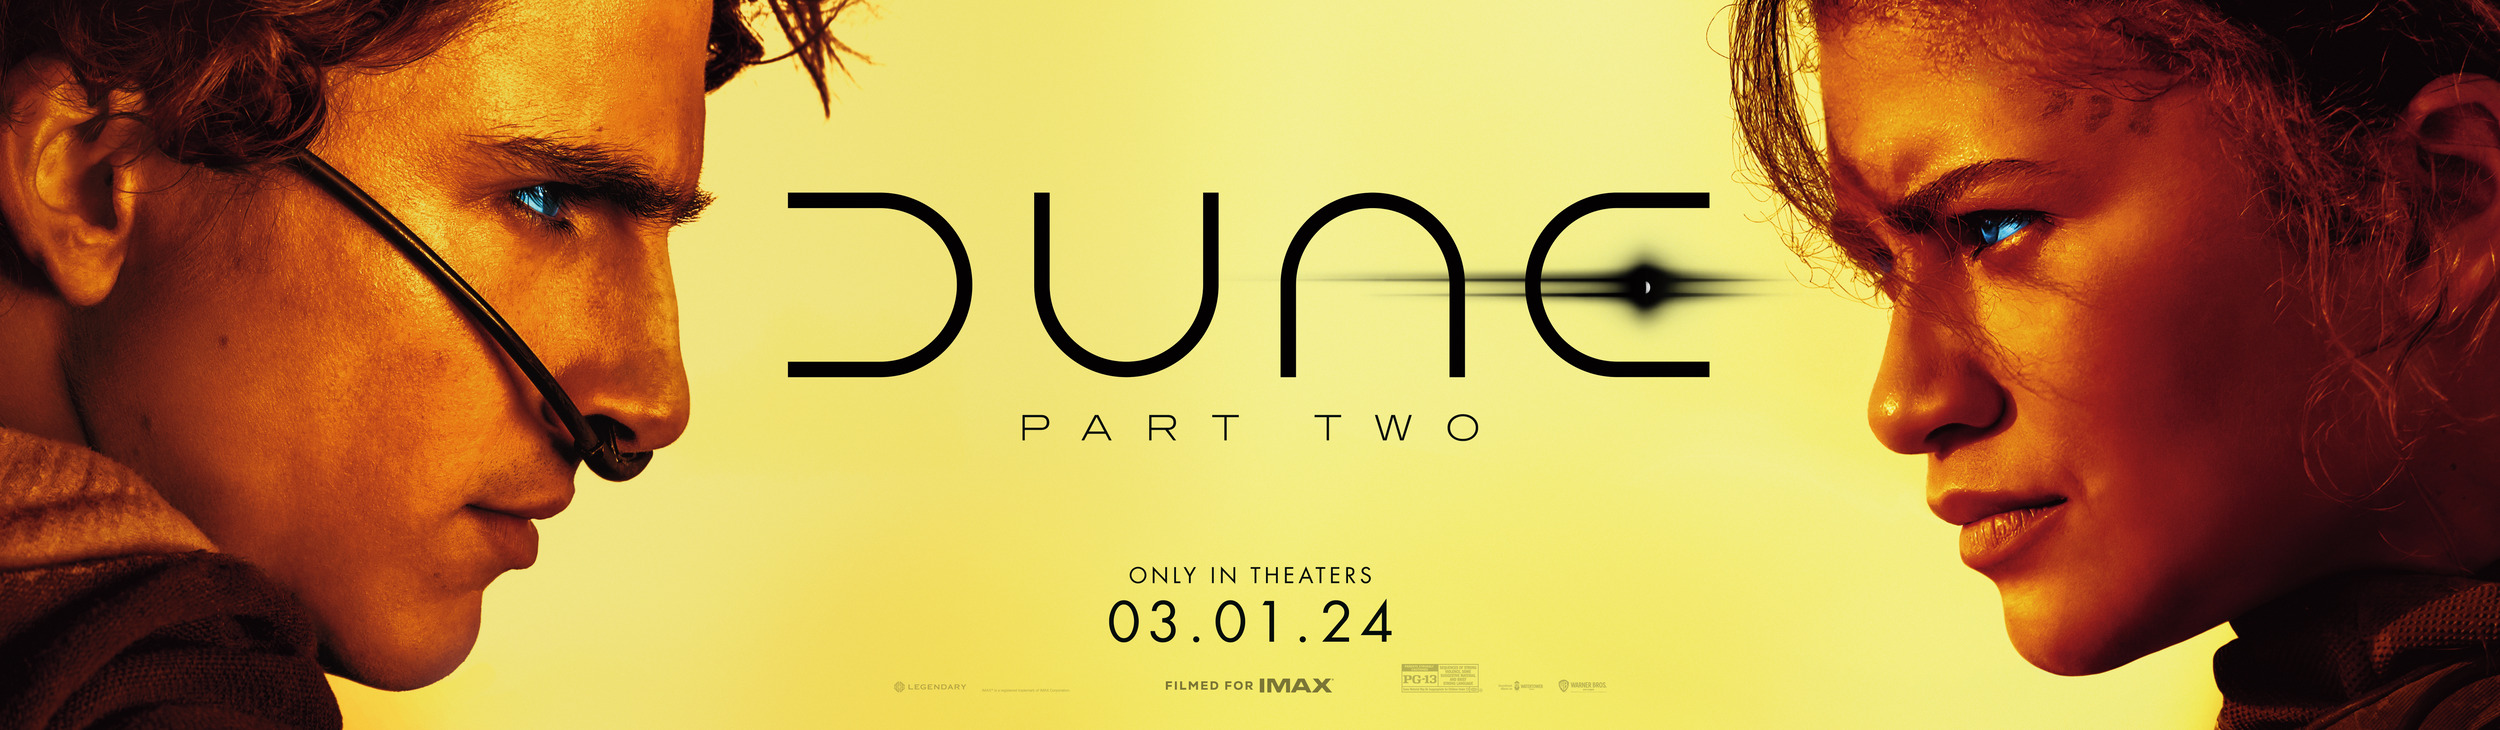 Mega Sized Movie Poster Image for Dune 2 (#21 of 31)